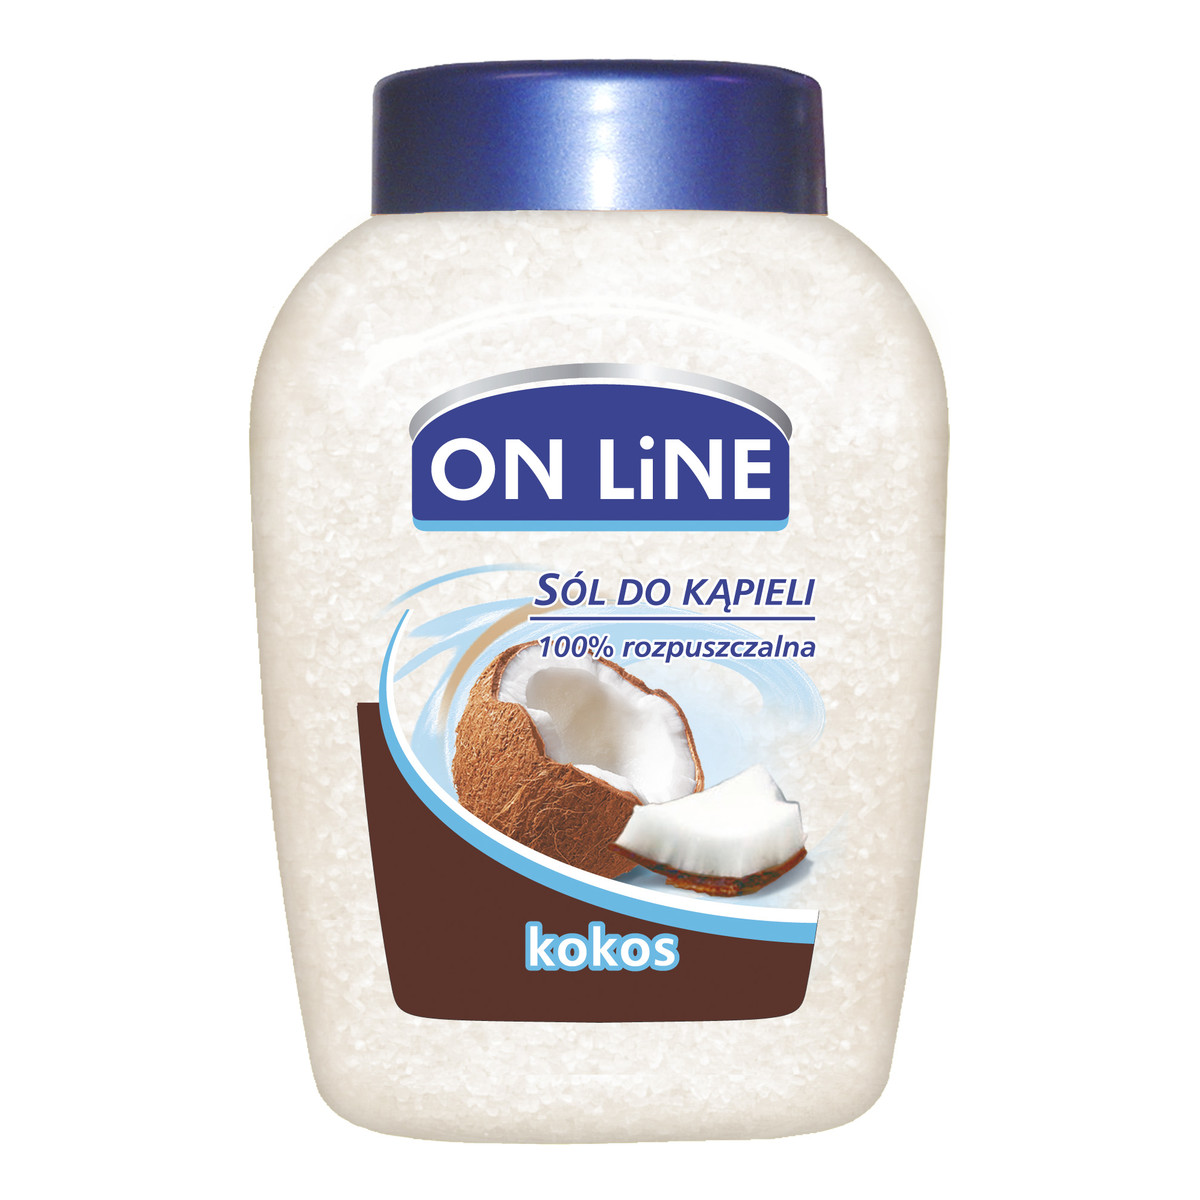 On Line Kokos Sól Do Kąpieli 750ml